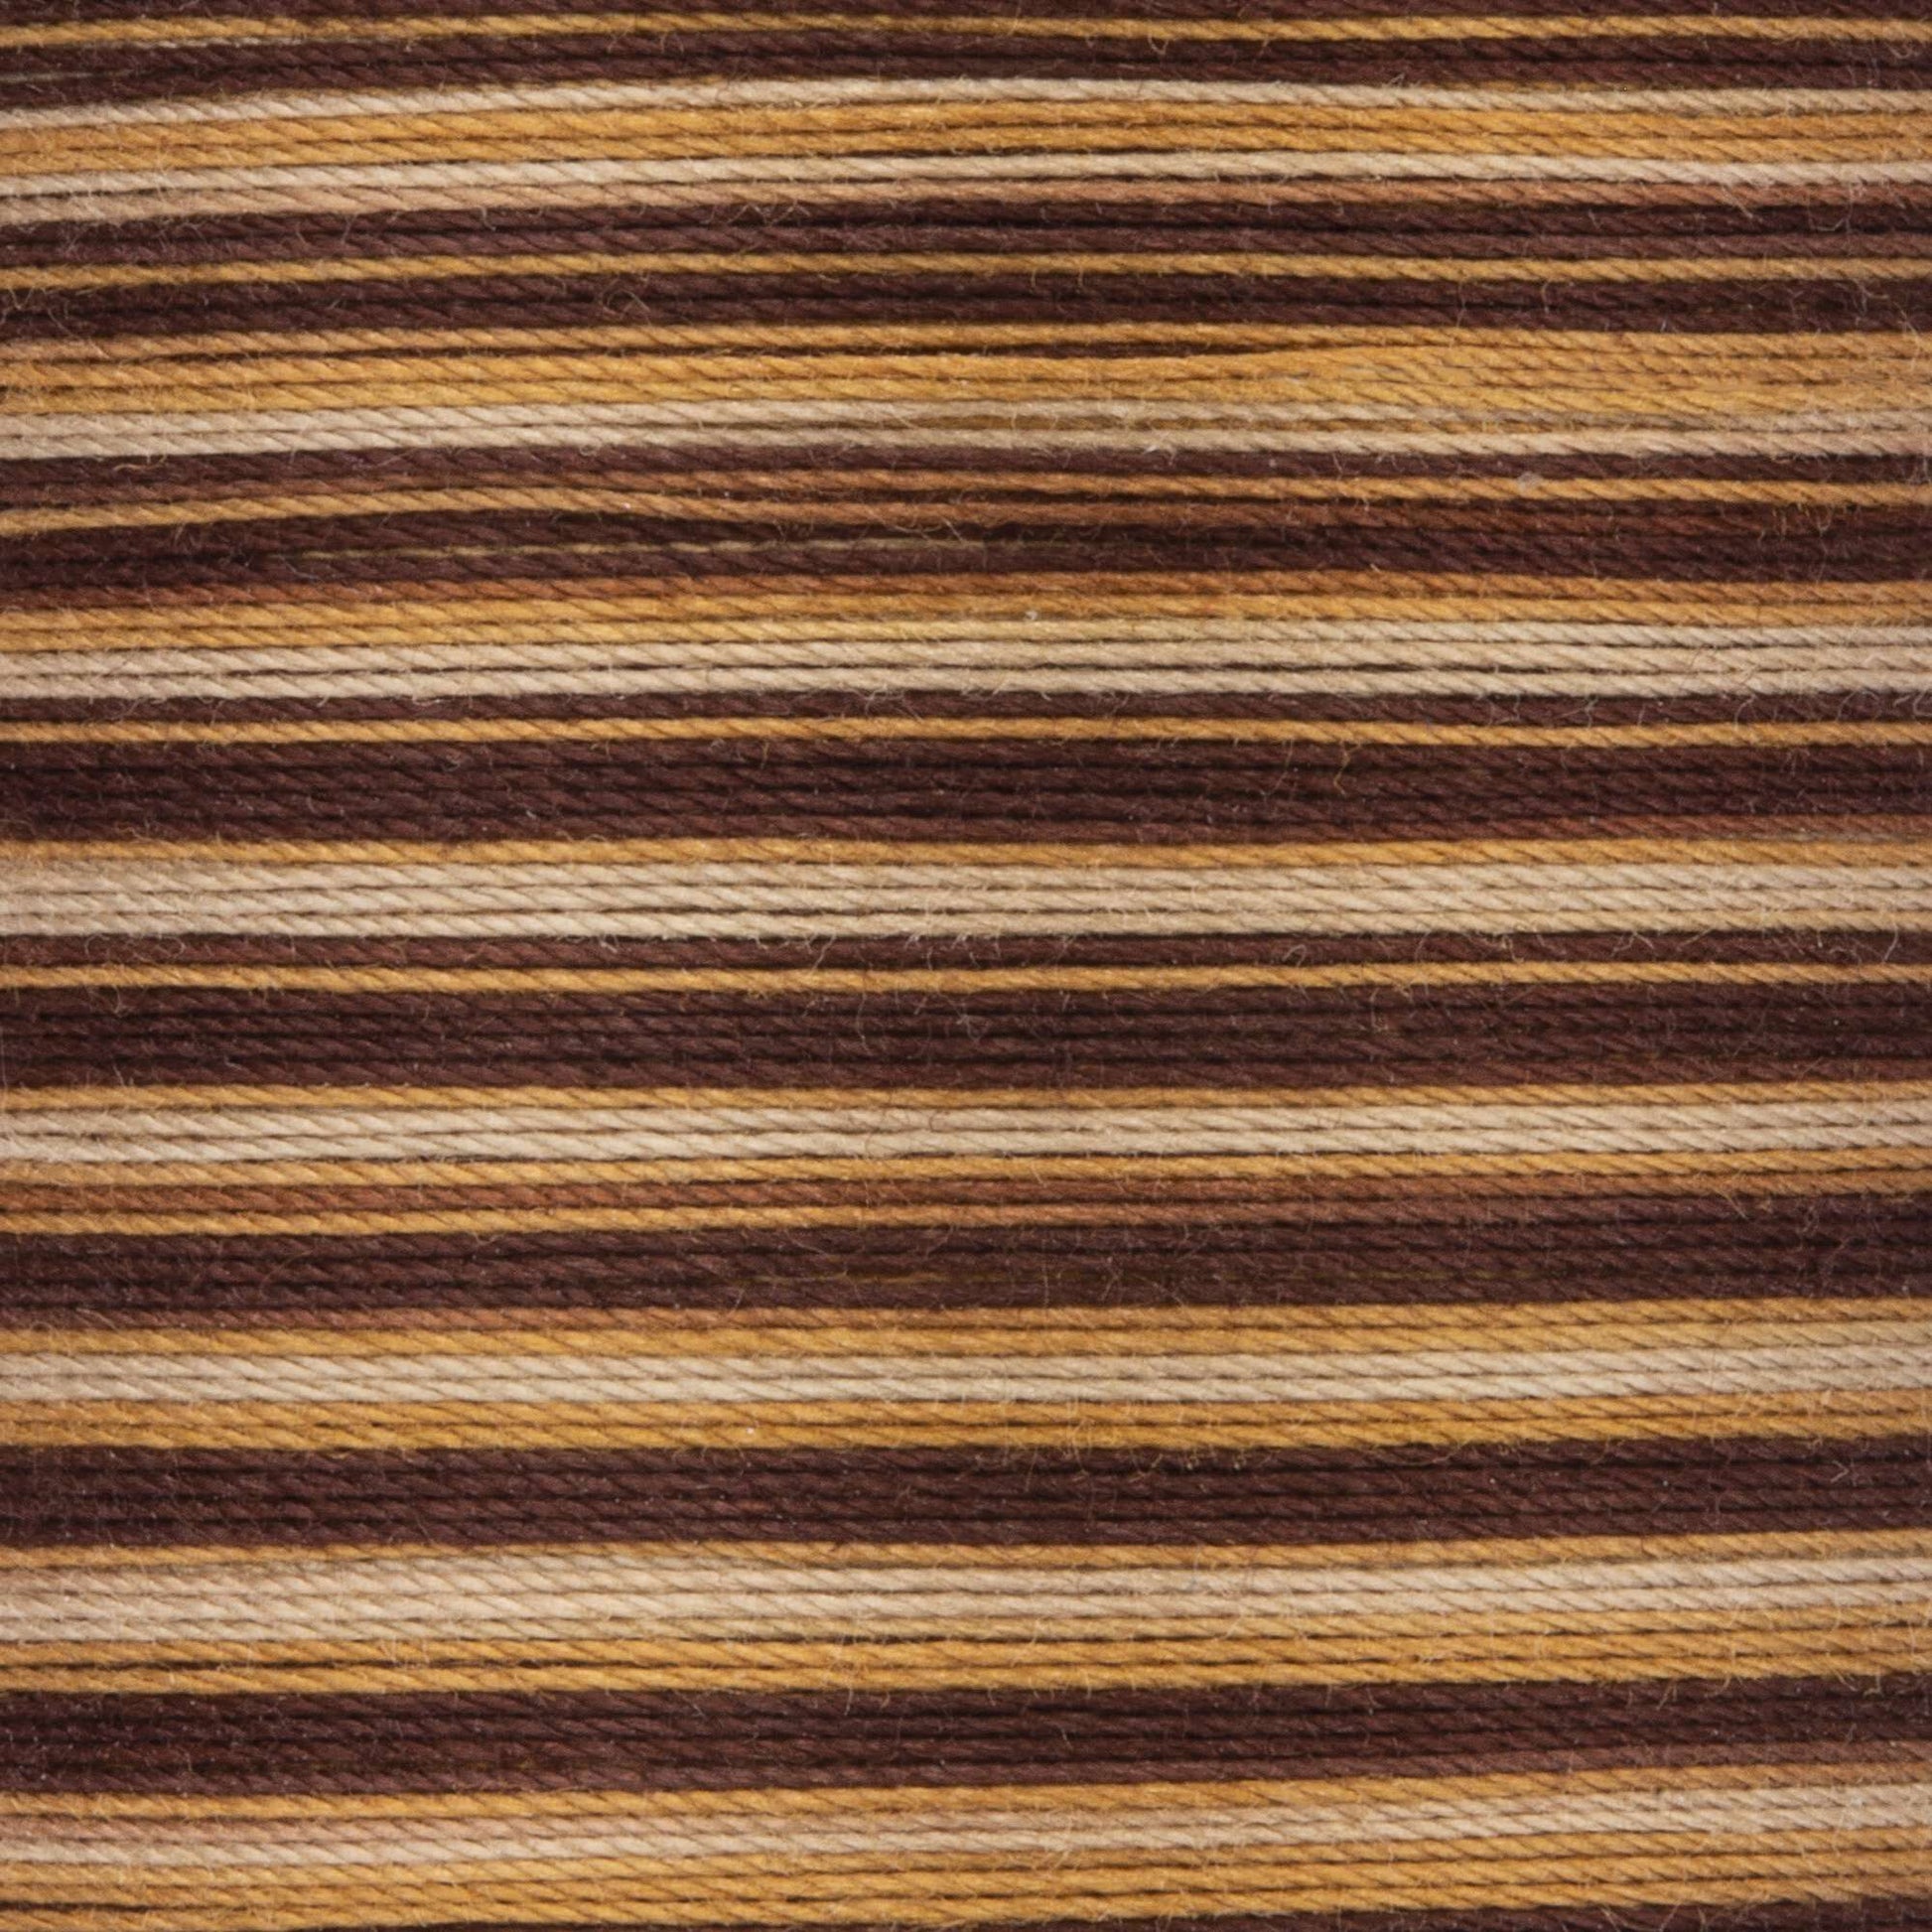 Coats & Clark Cotton Machine Quilting Multicolor Thread (225 Yards) Chocolate Swirl